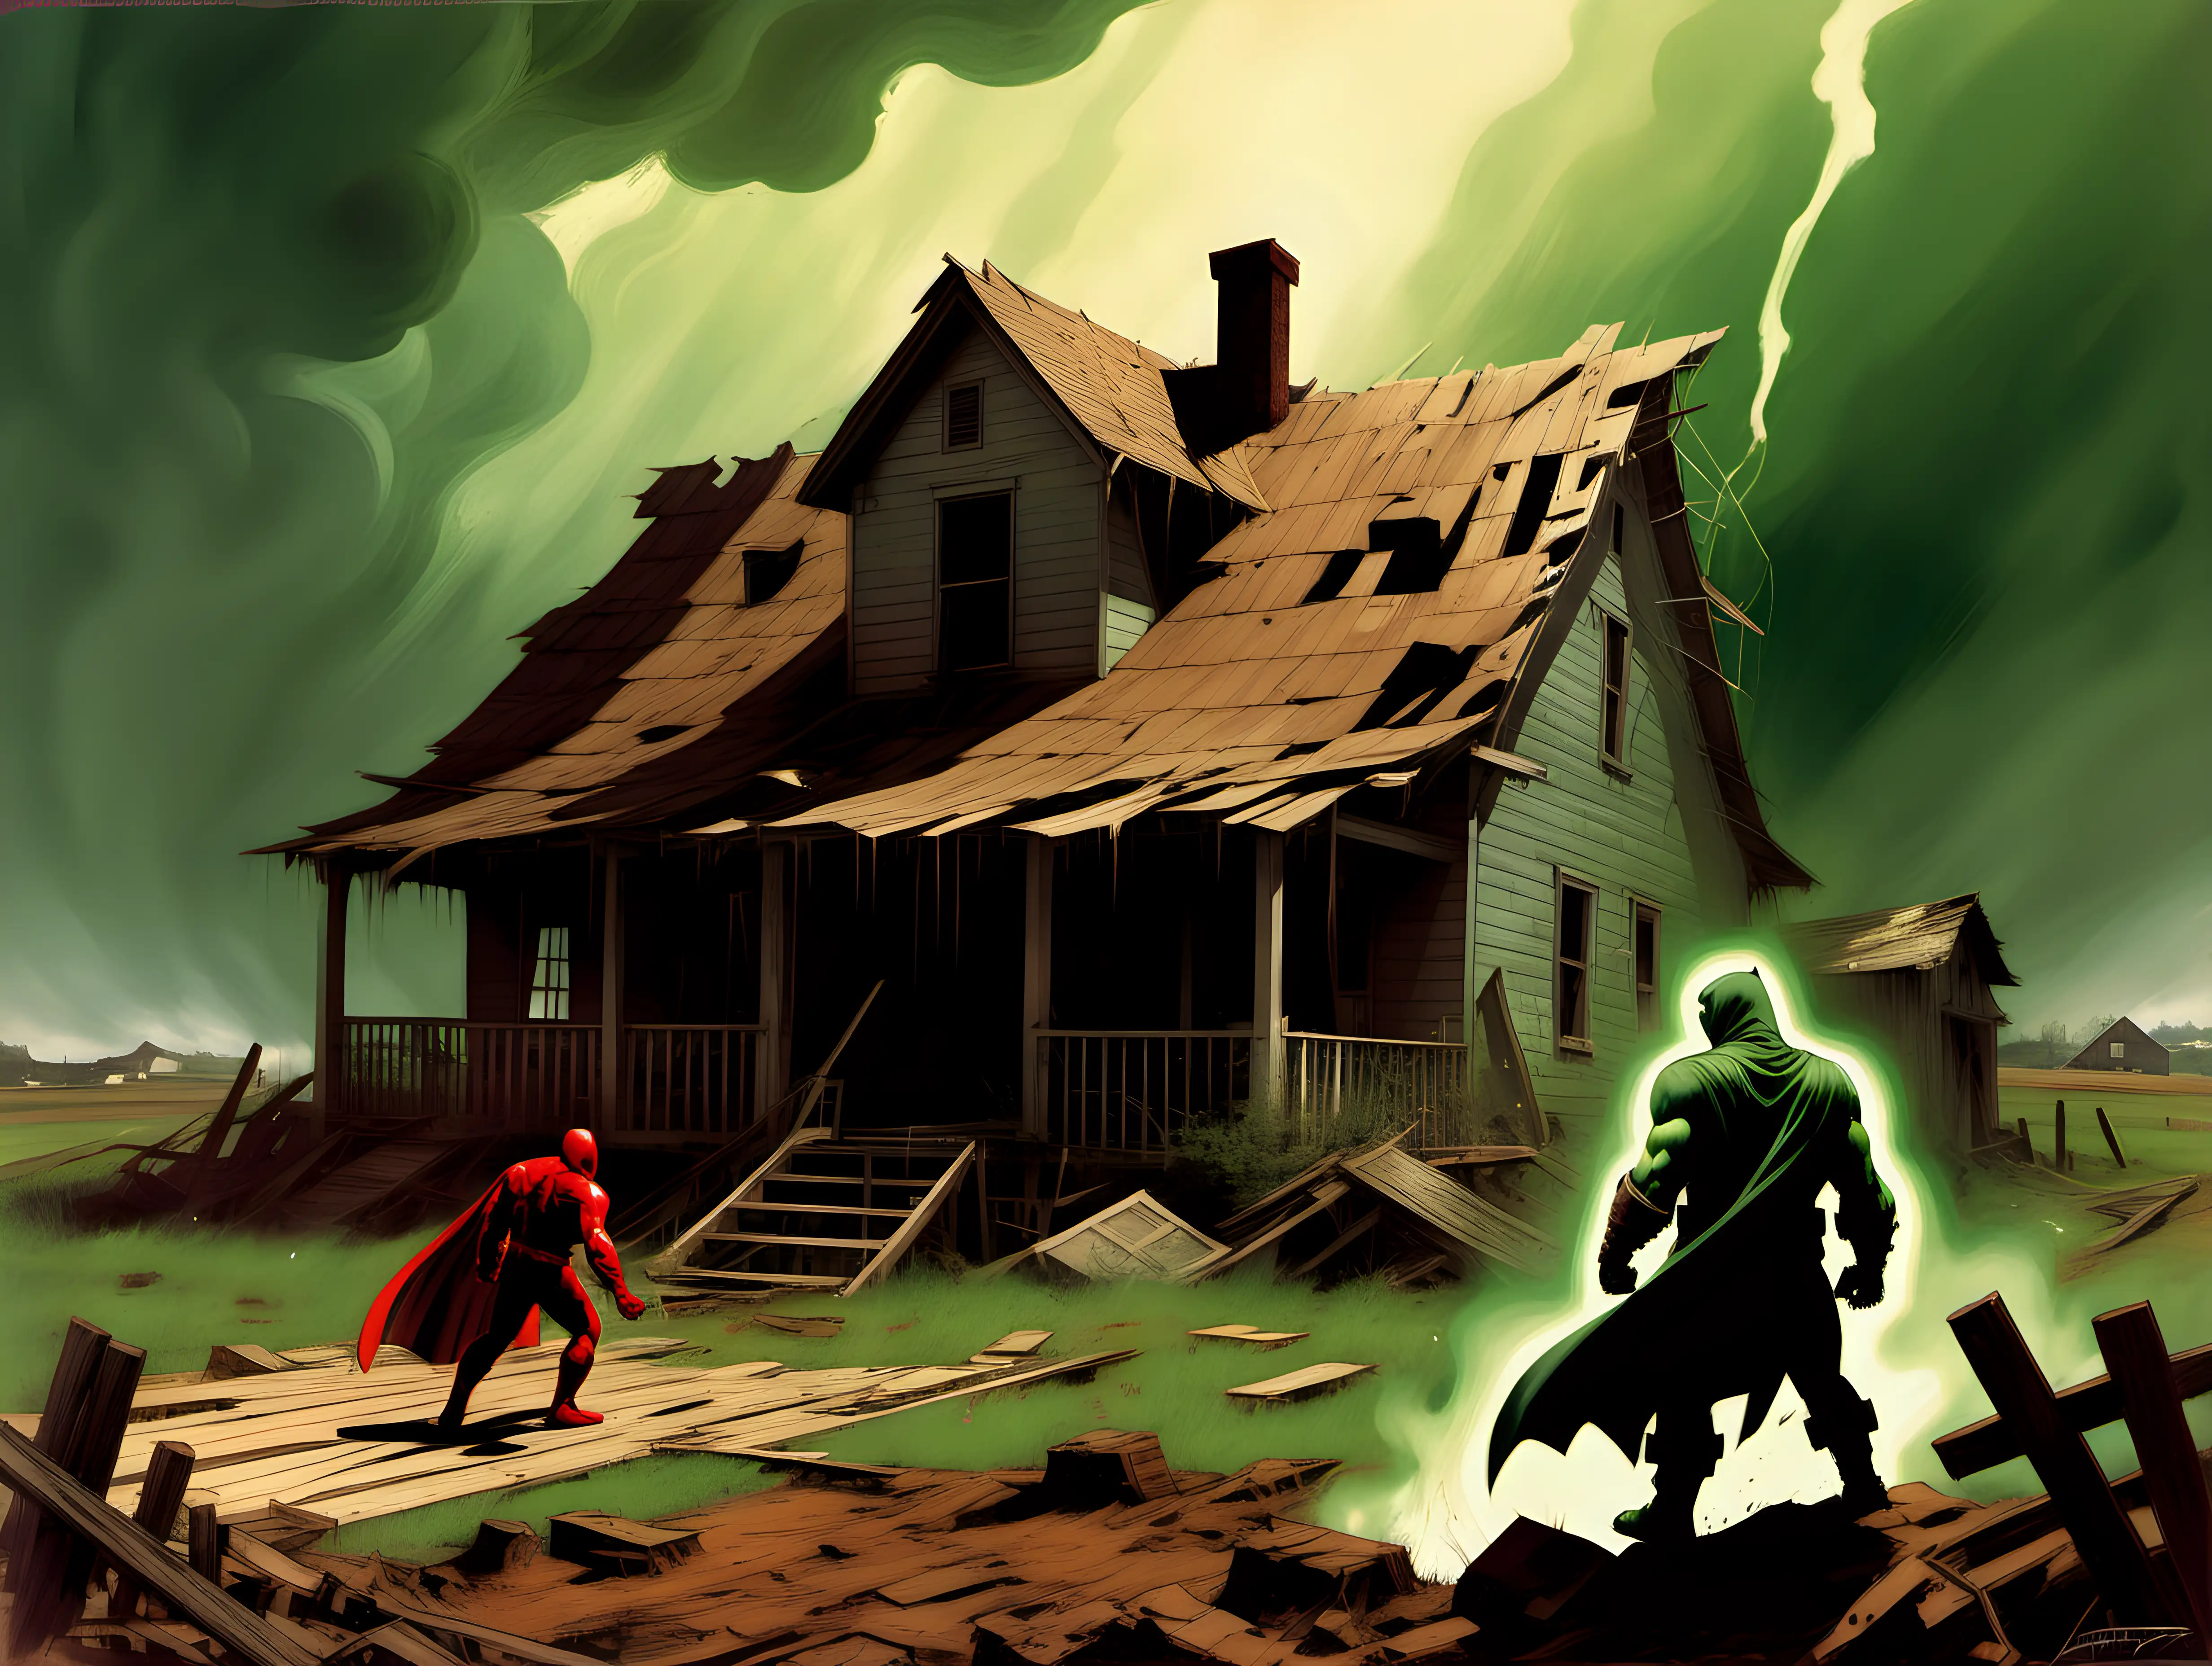 Daredevil vs Doctor Doom Showdown in Abandoned Farm House Epic Battle Art